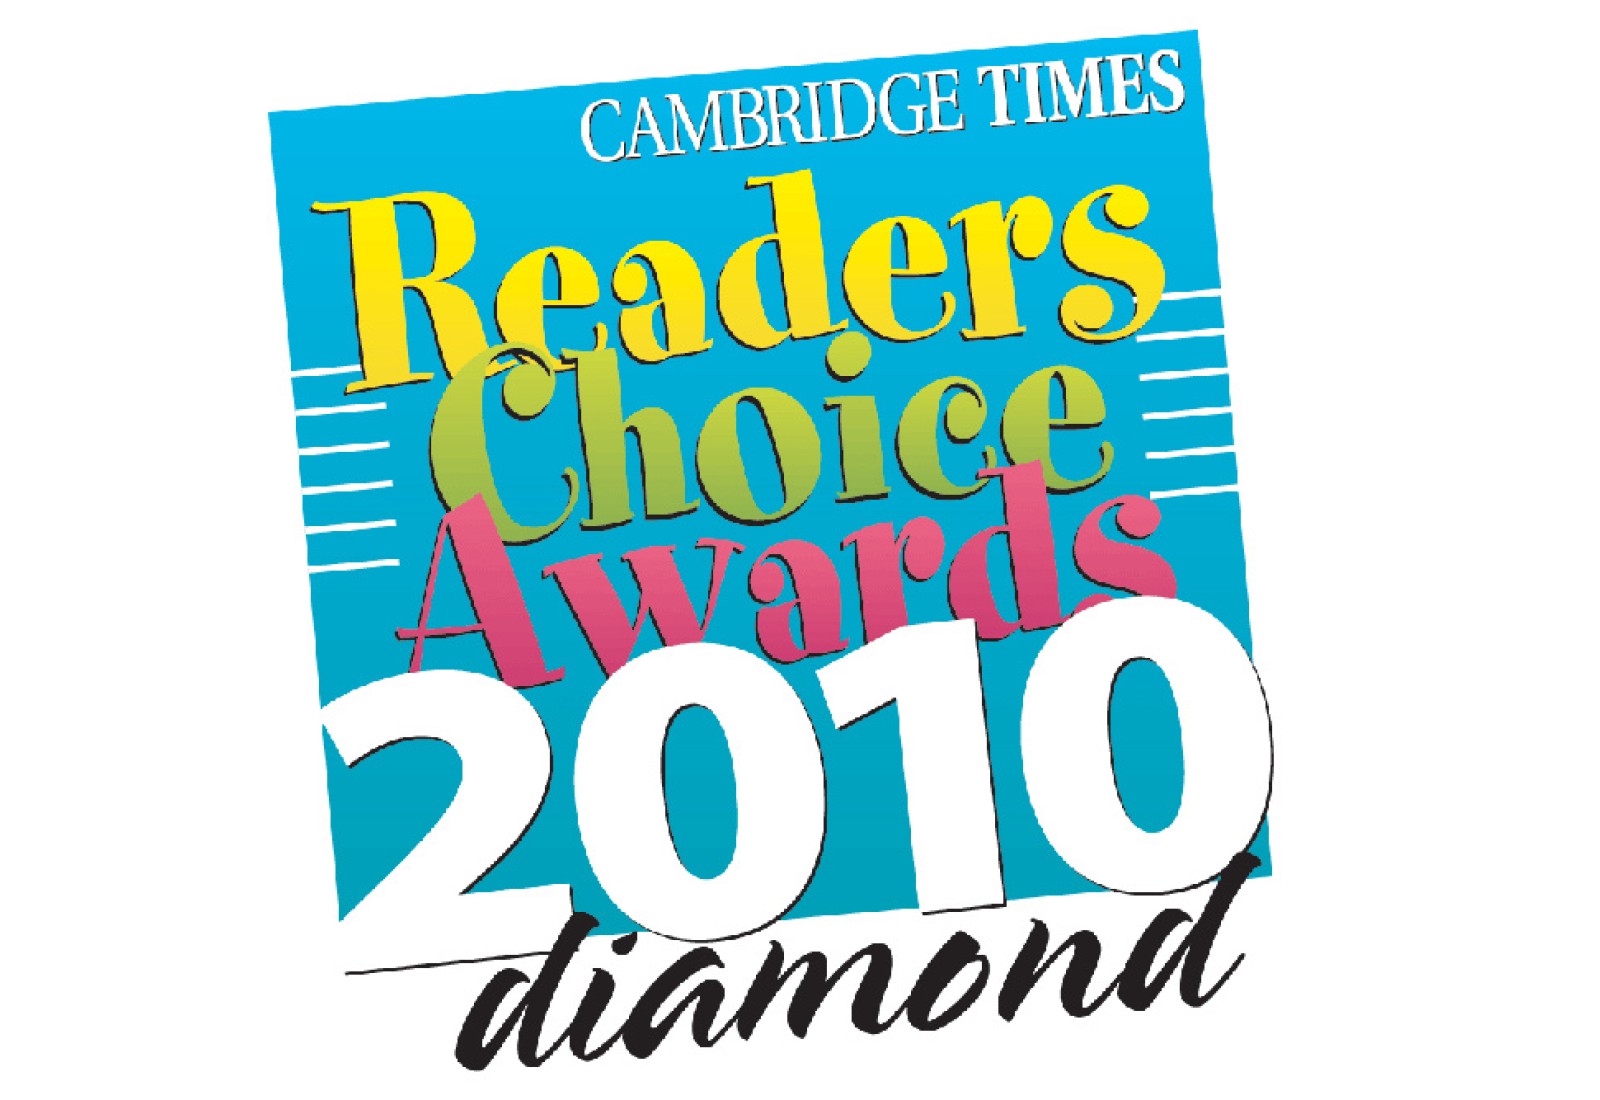 Cambridge Times Readers Choice Awards 2010 Diamond